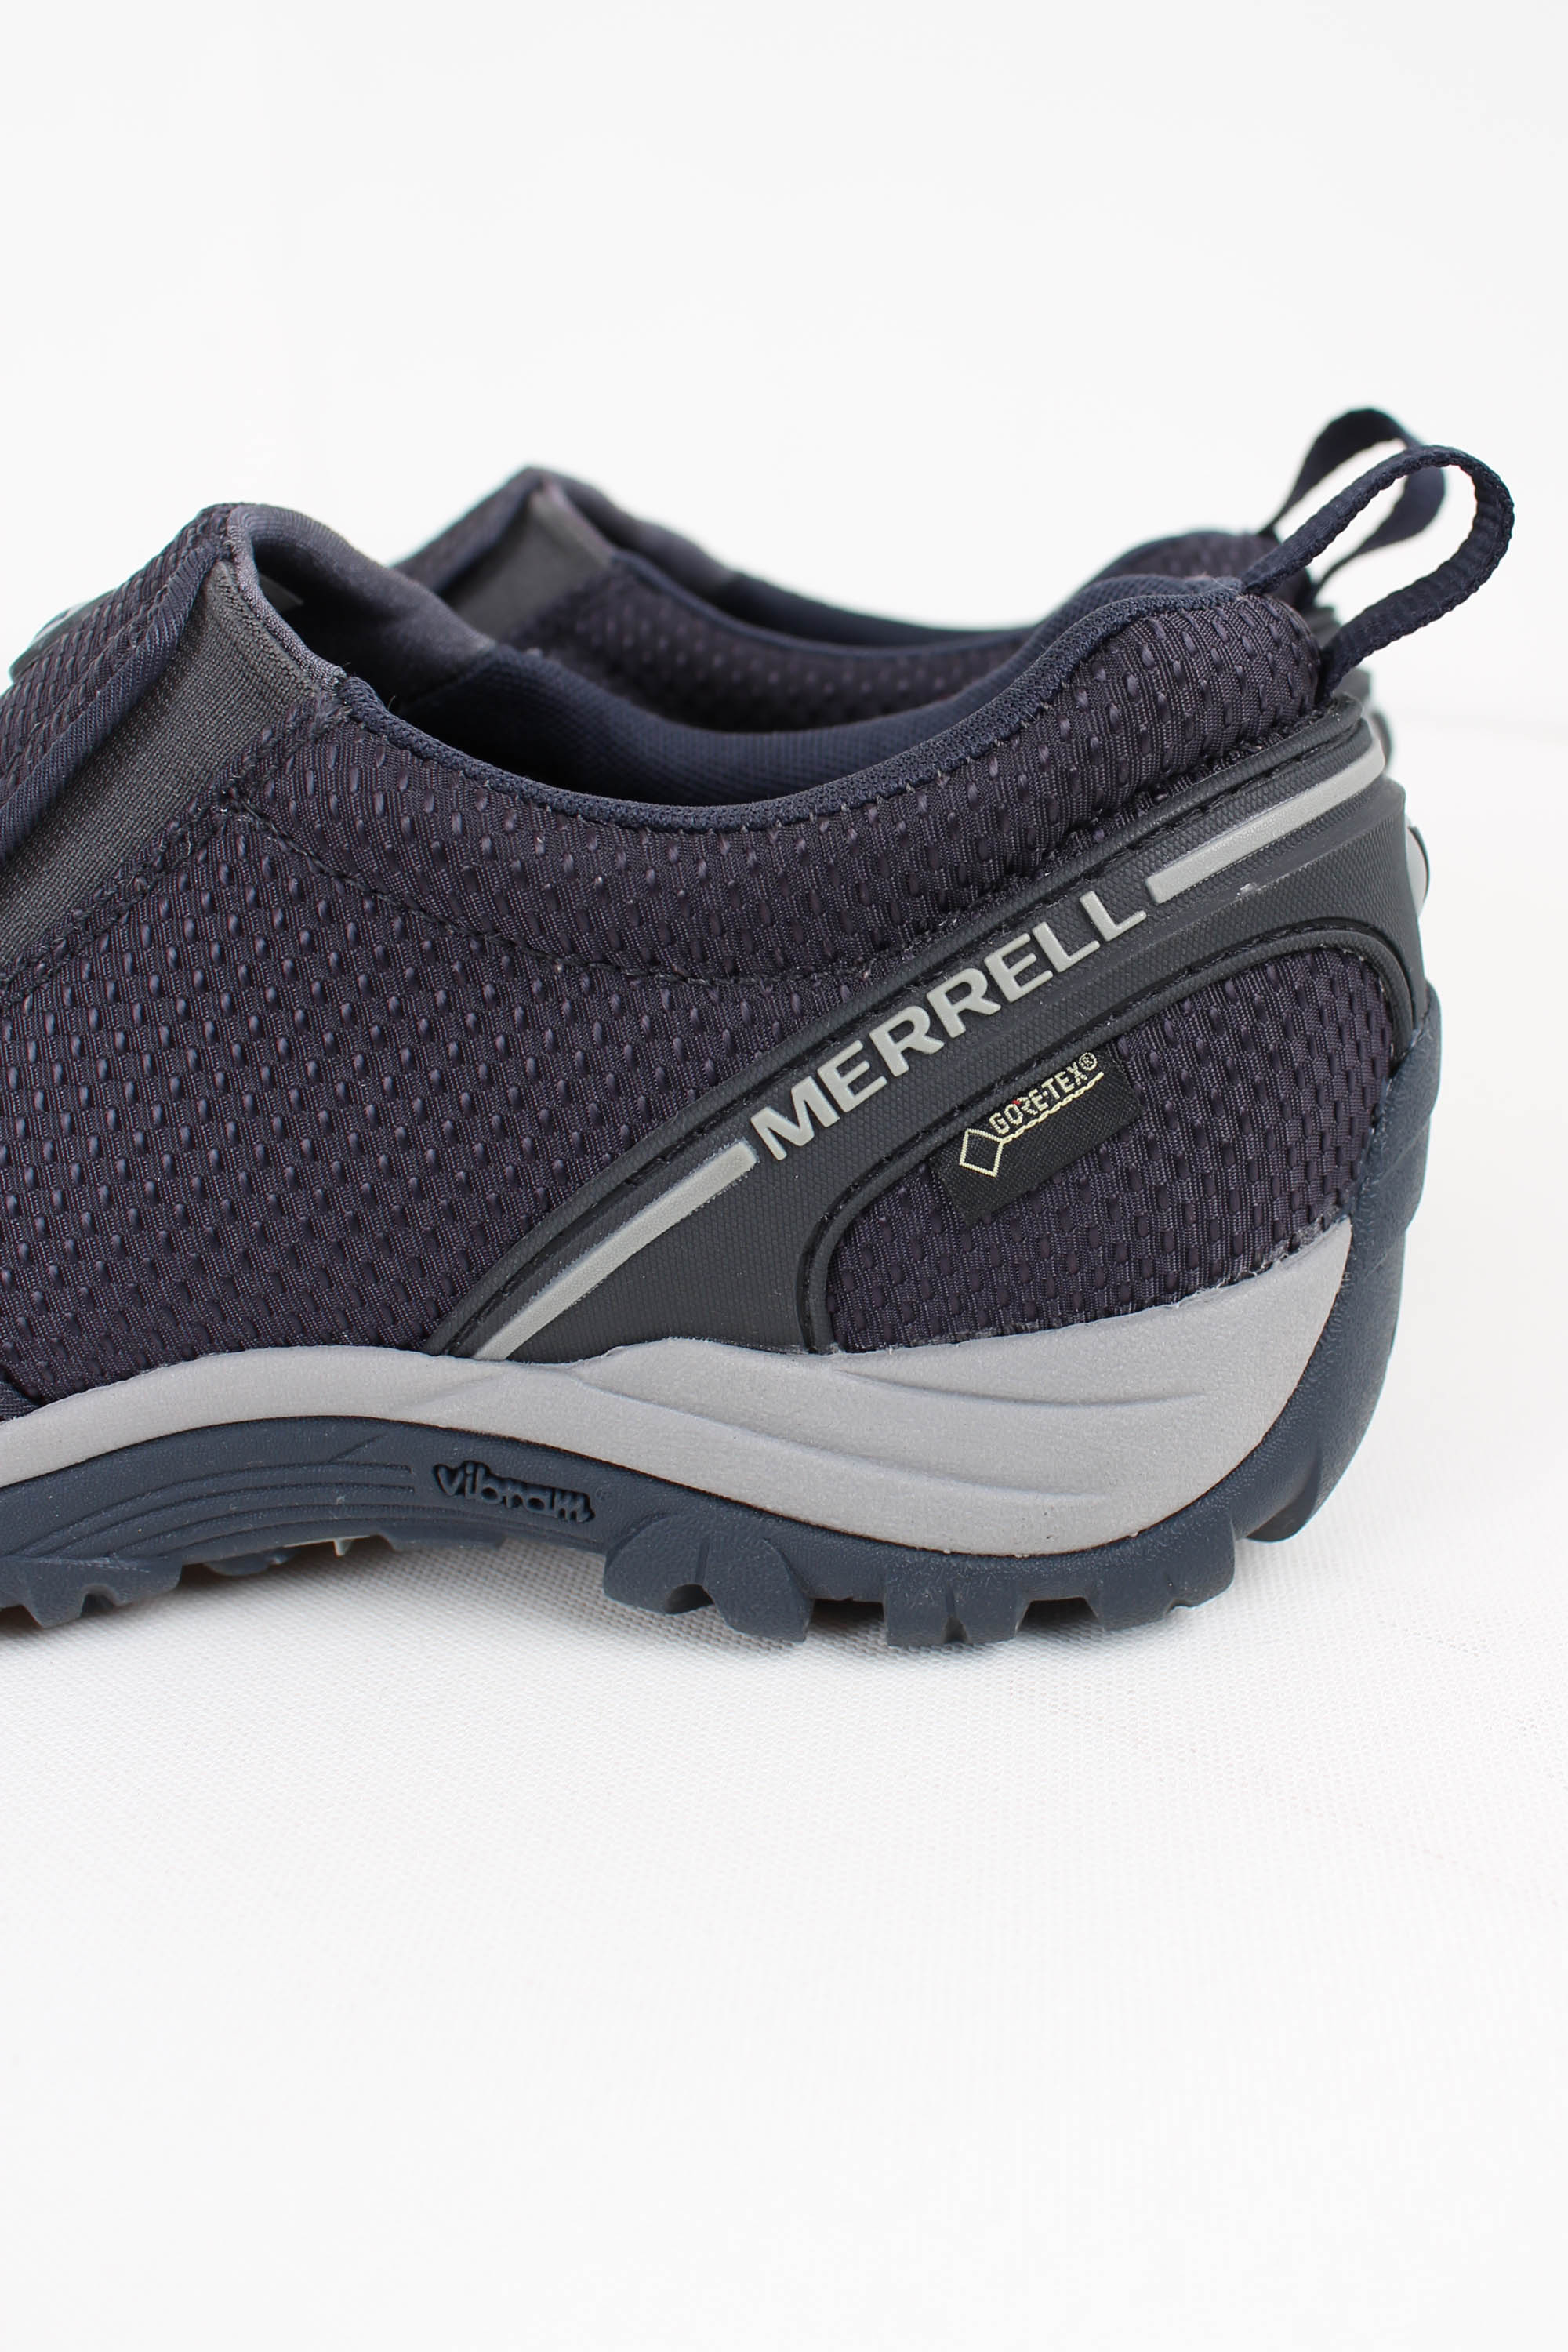 MERRELL Chameleon5 Storm Moc shoes